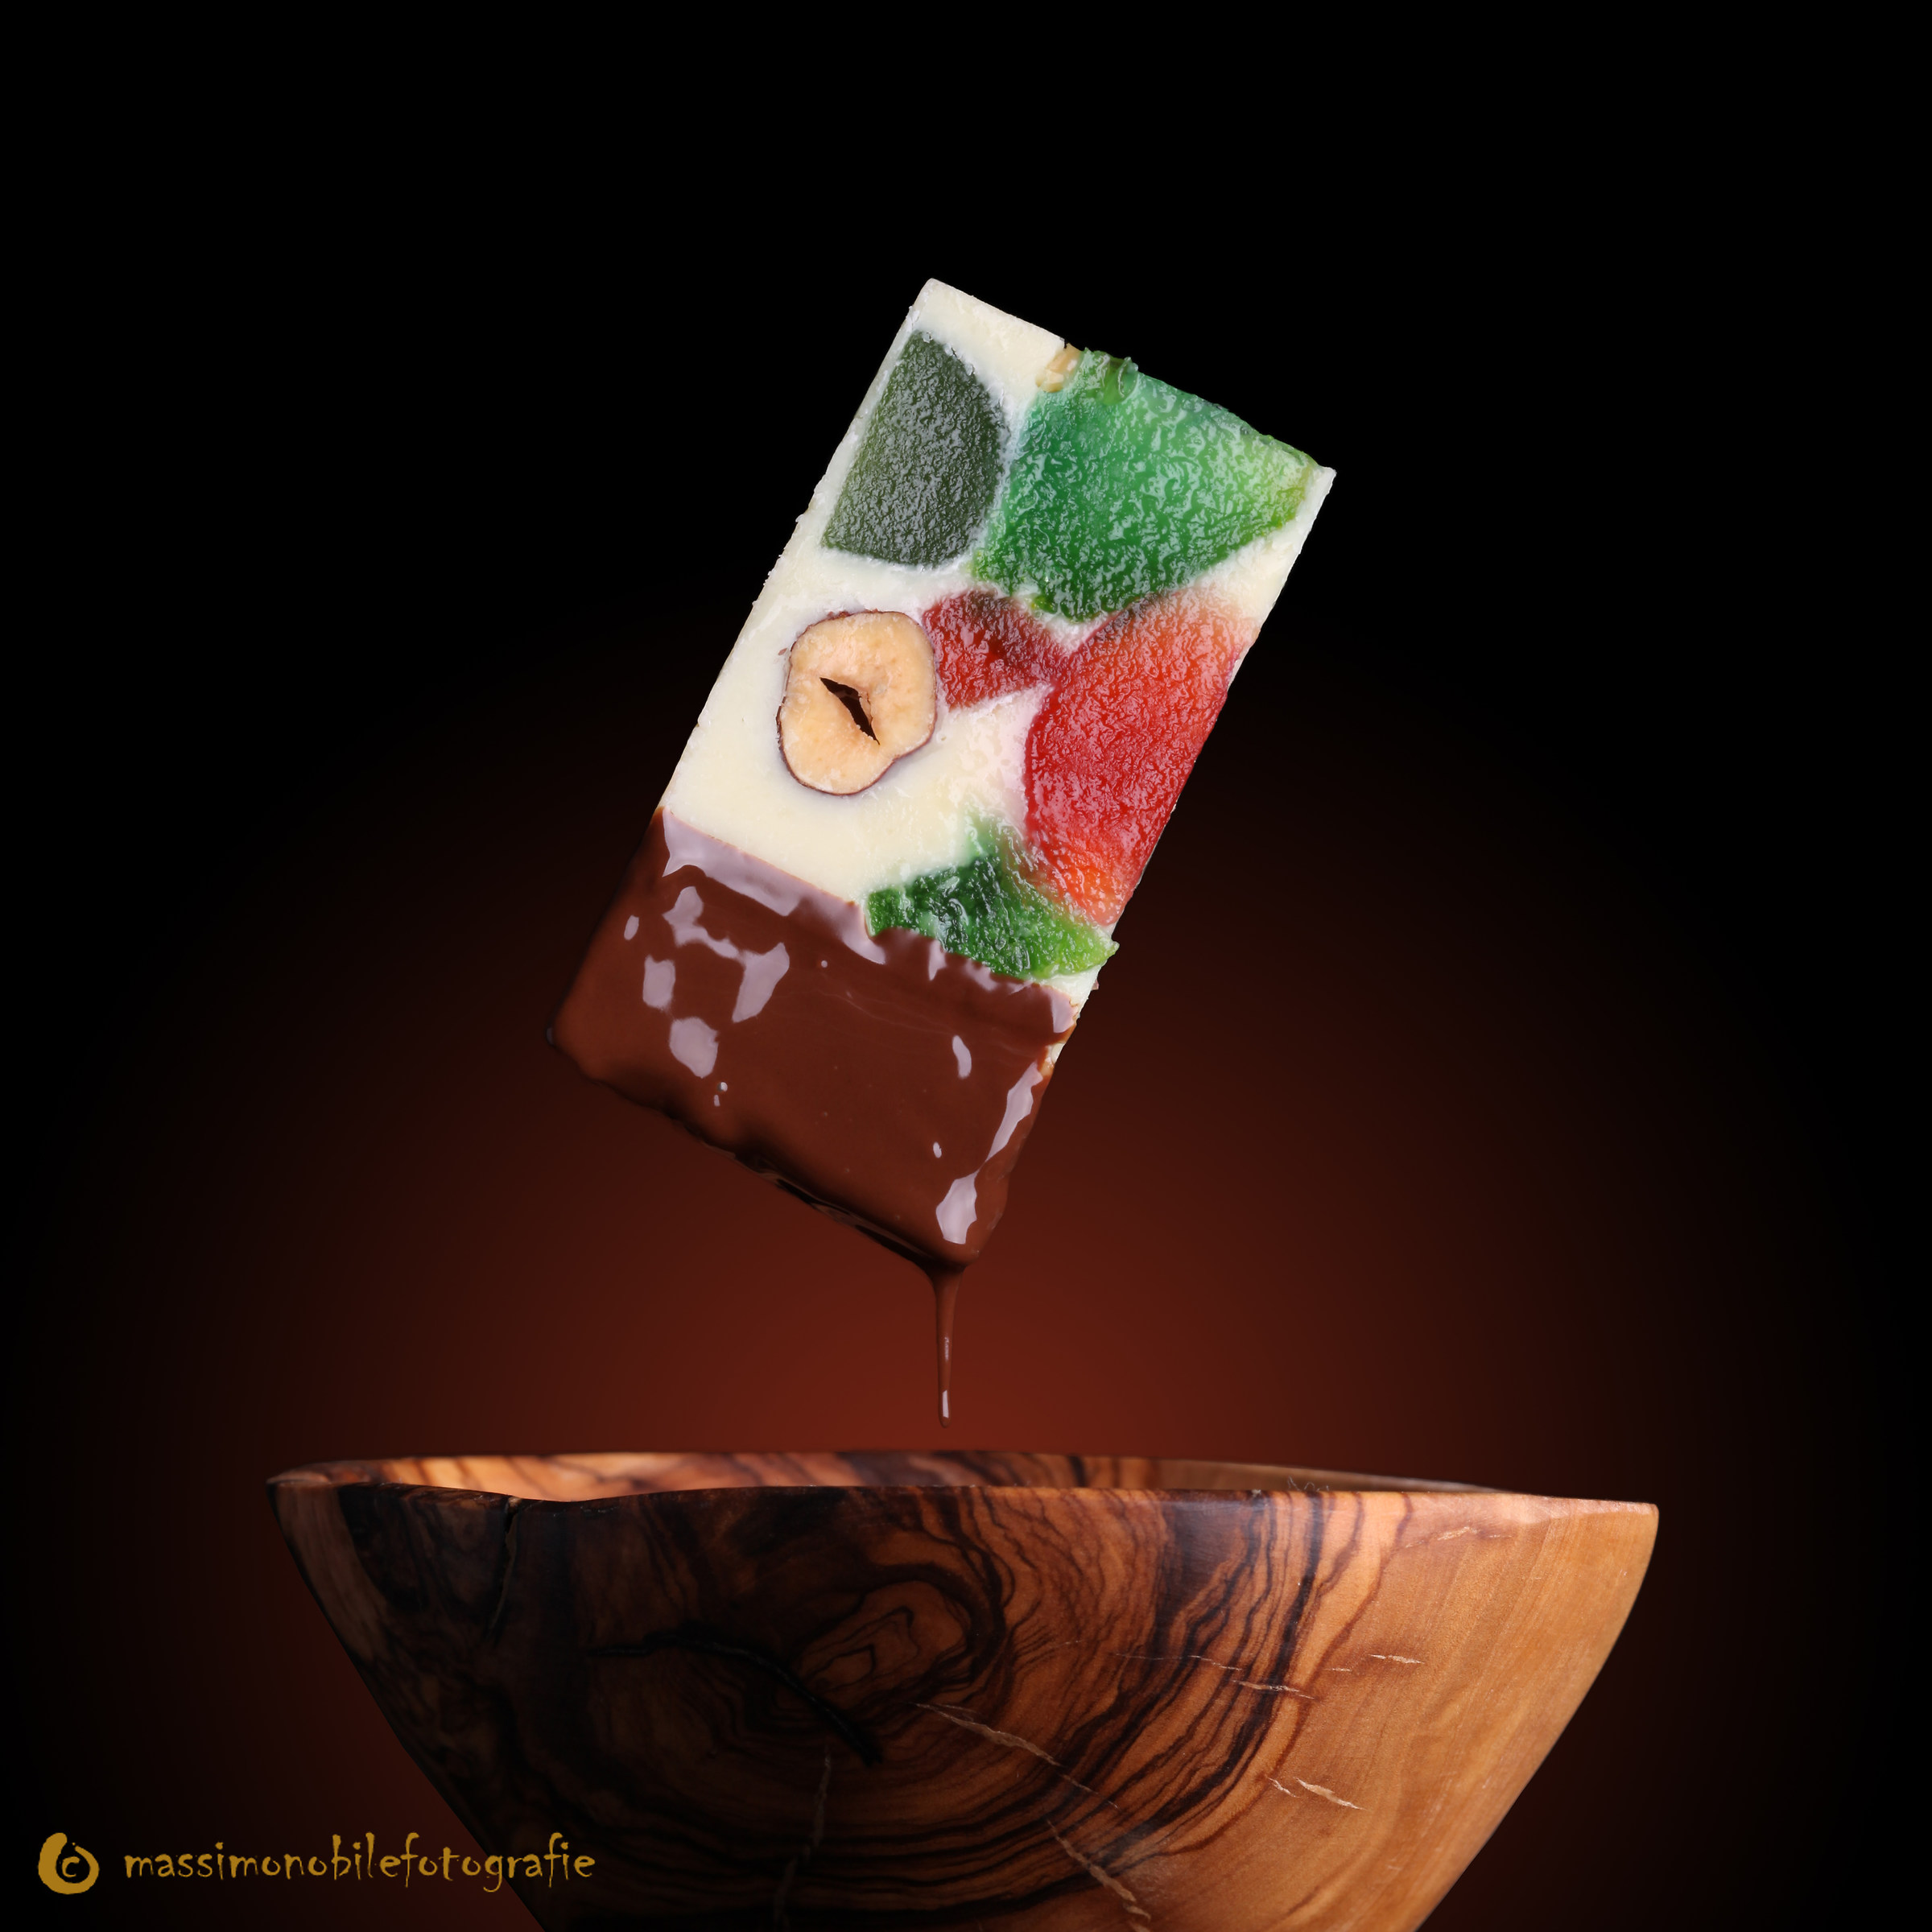 Italian chocolate...